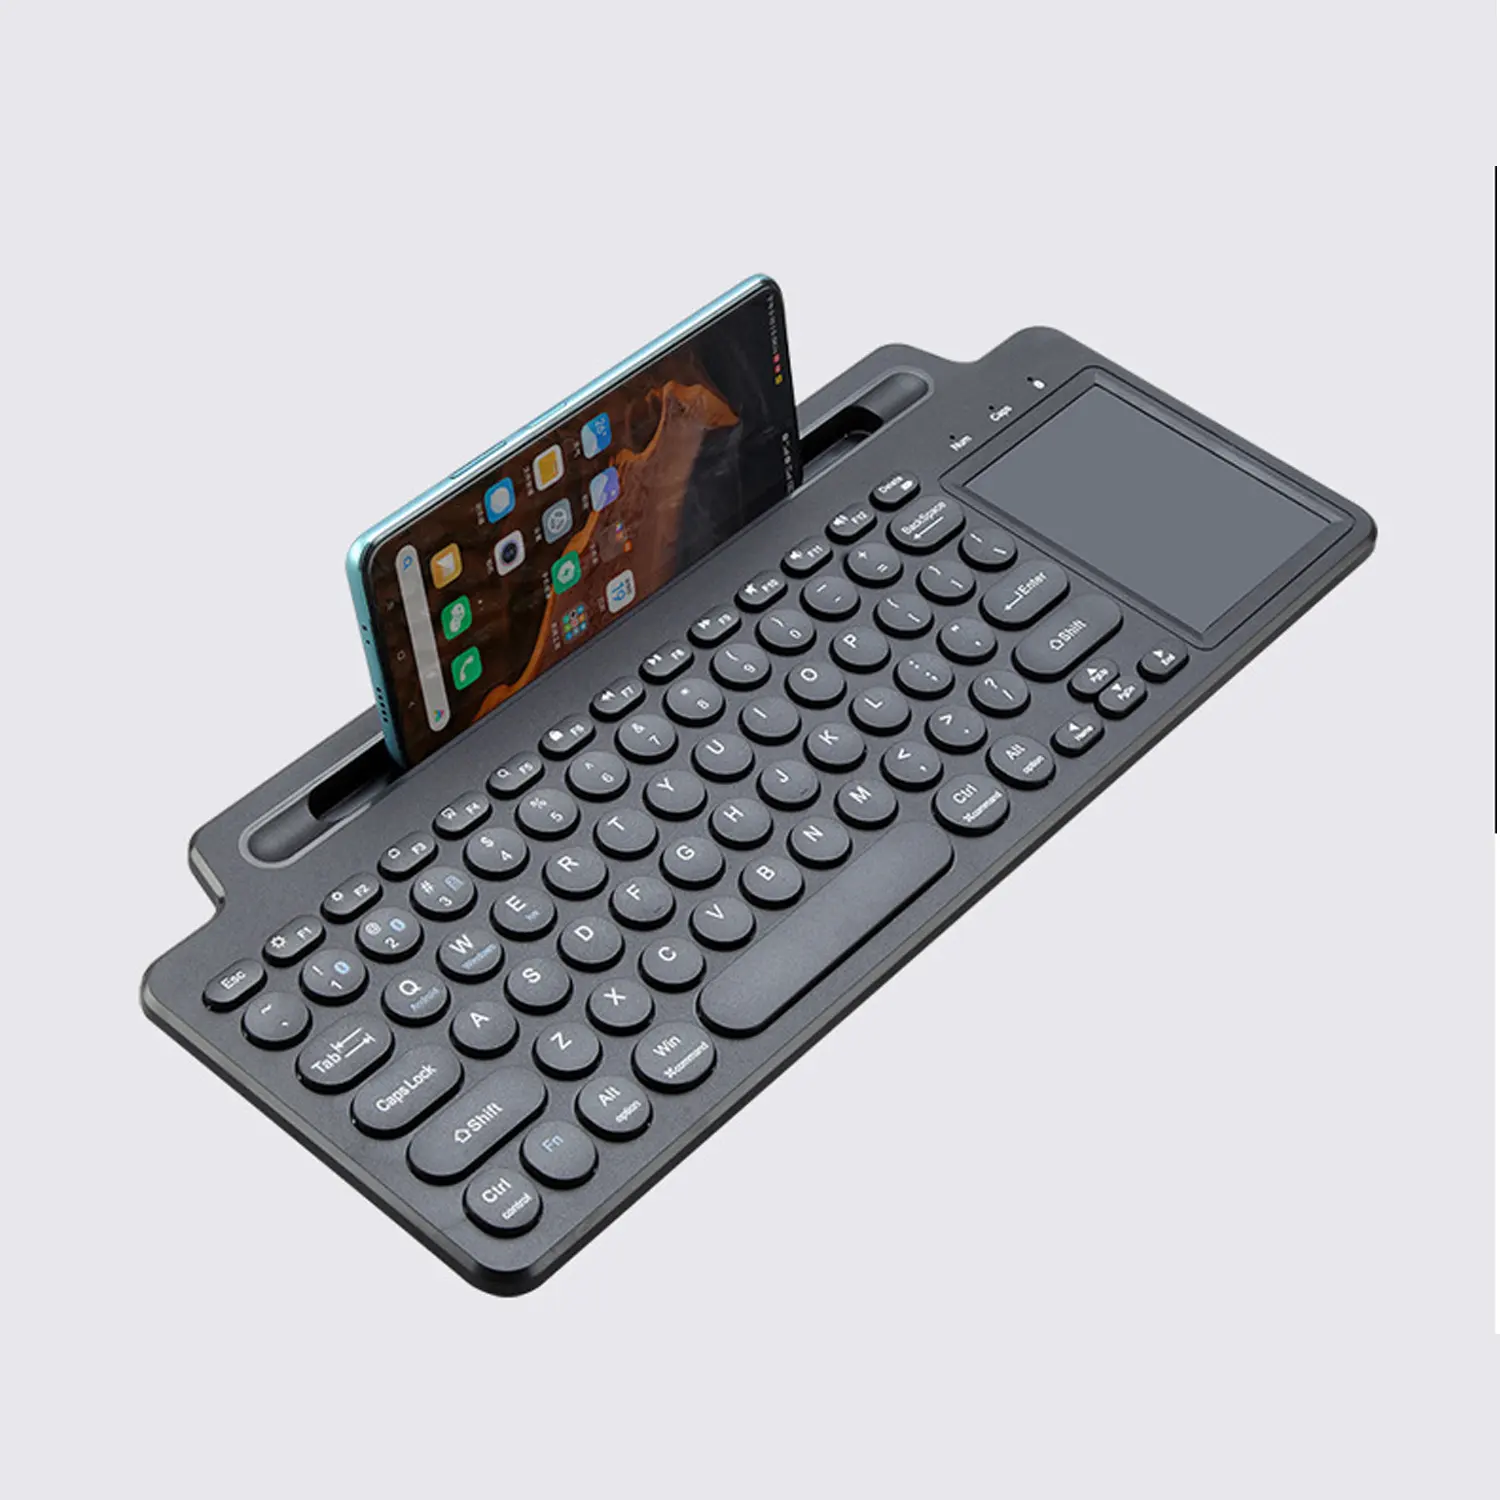 BT kablosuz Touchpad bluetooth dahili tutucu ile anahtar kurulu kolay medya kontrol ofis dizüstü Tablet telefon bilgisayar klavye